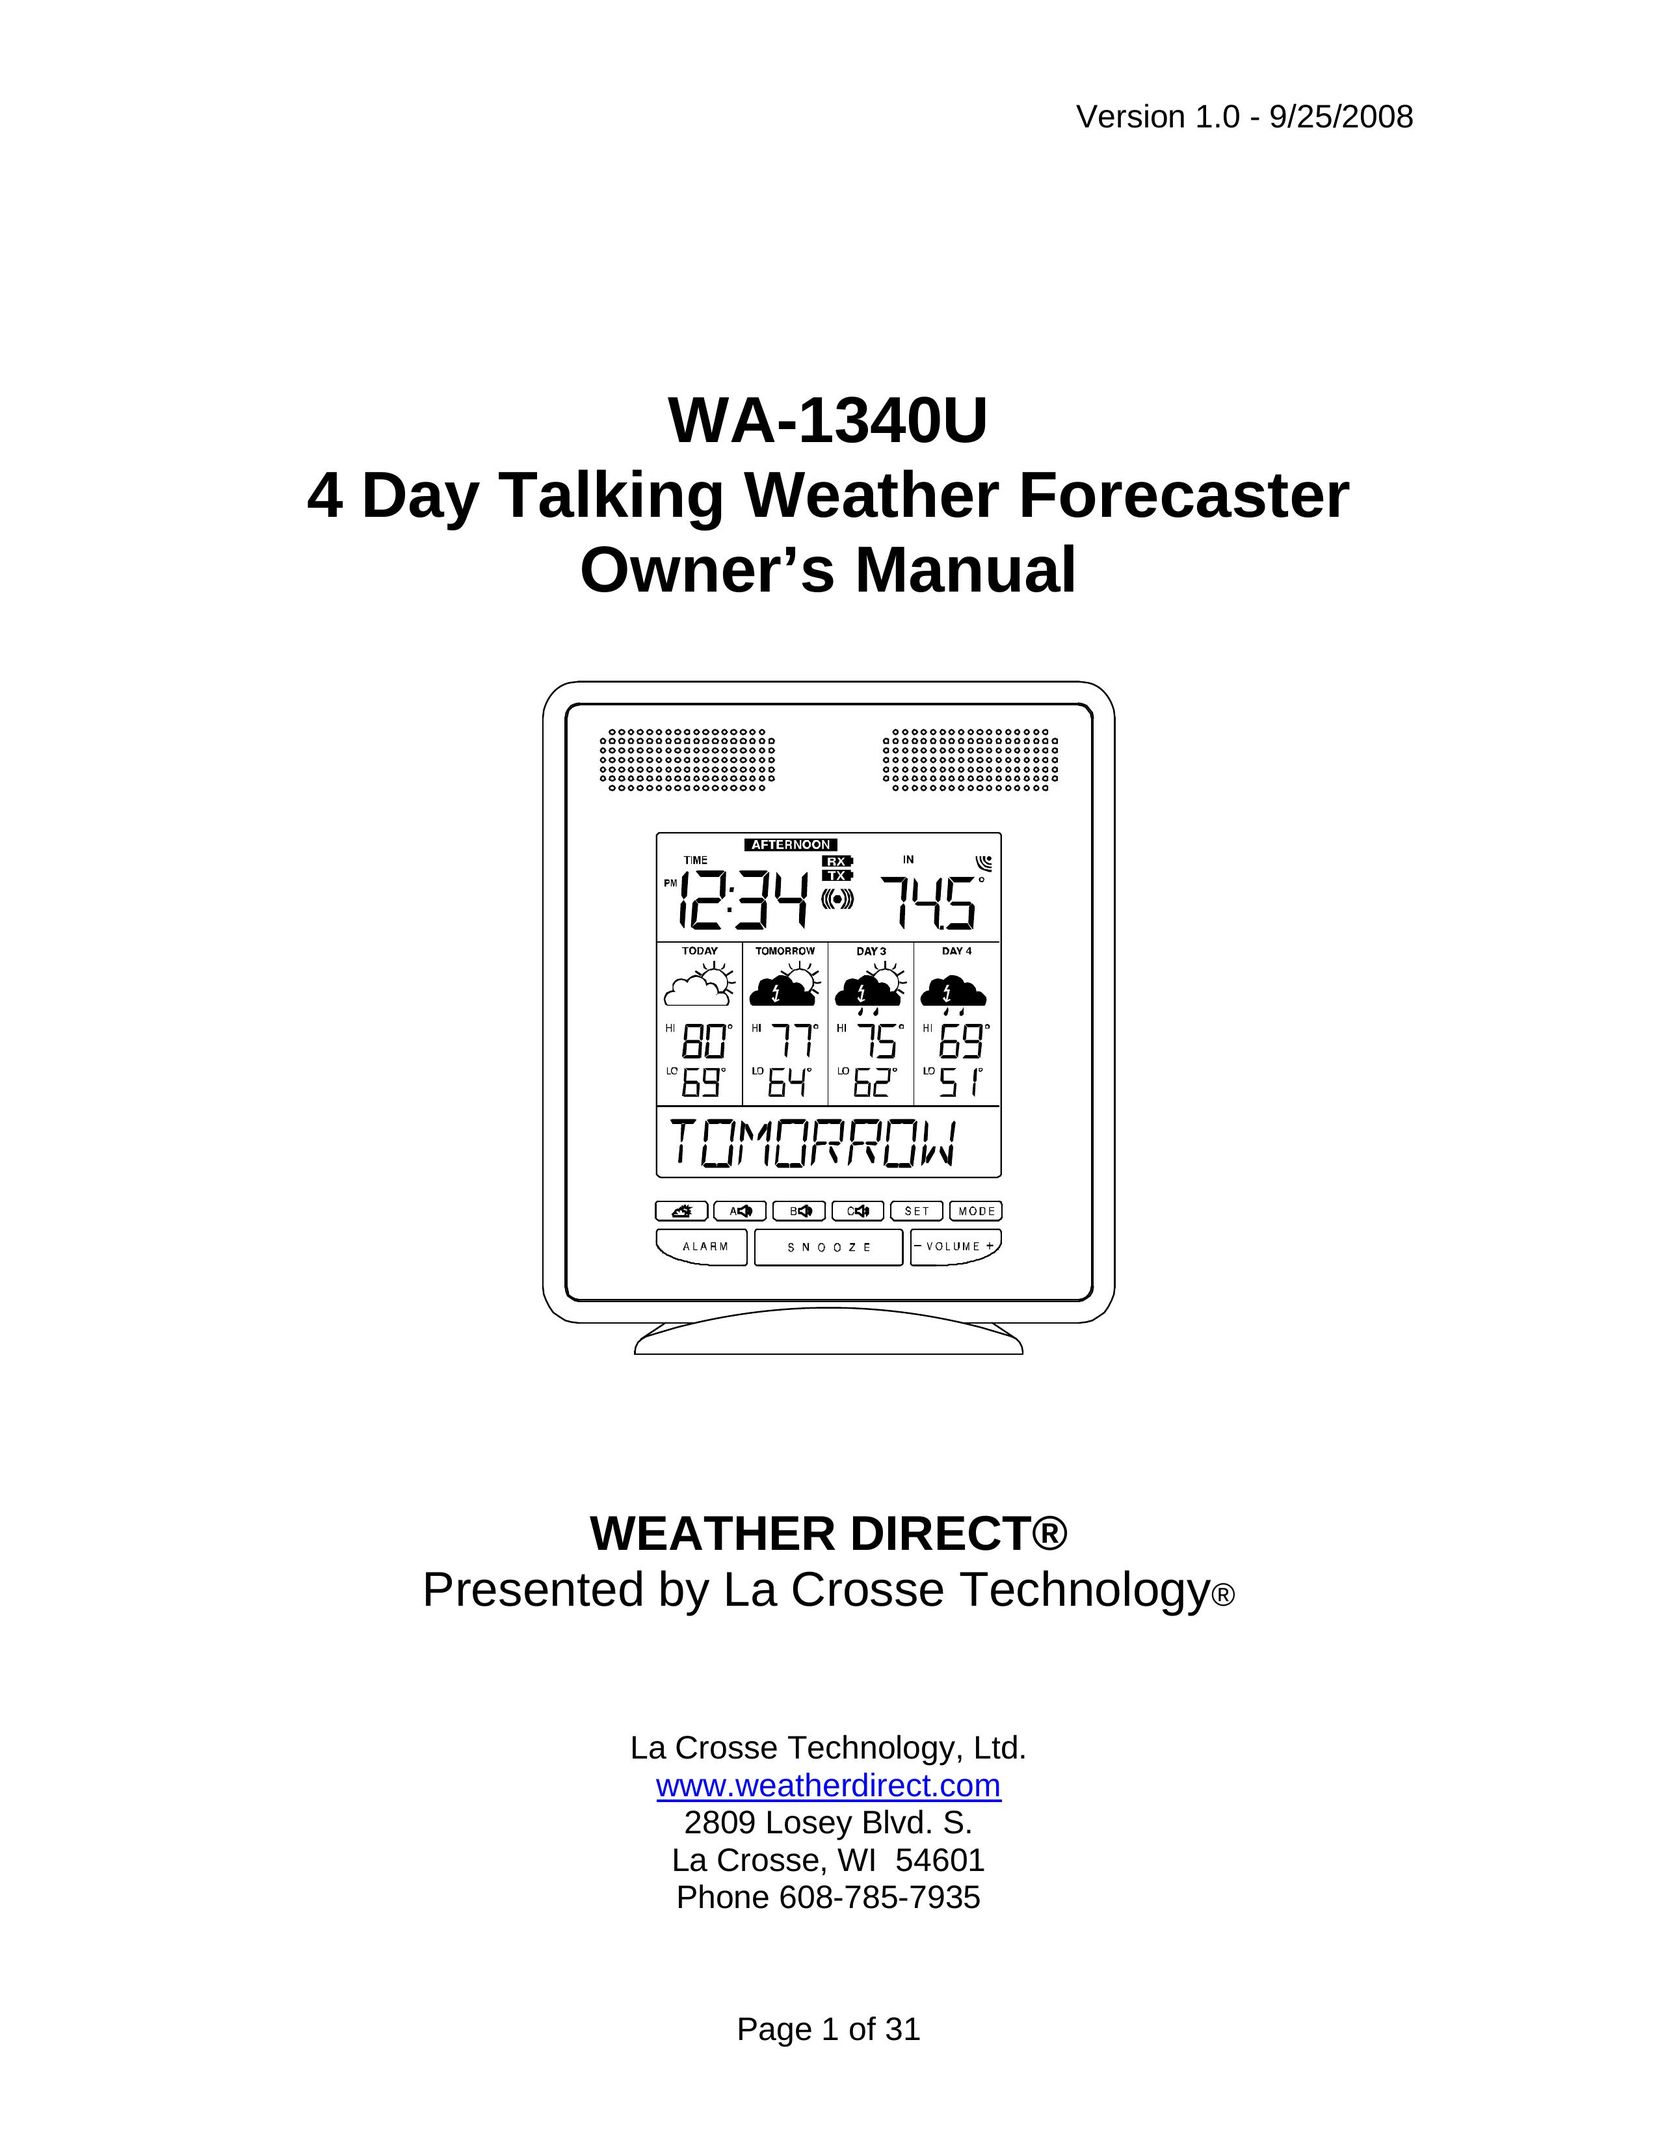 La Crosse Technology WA-1340U Portable Radio User Manual